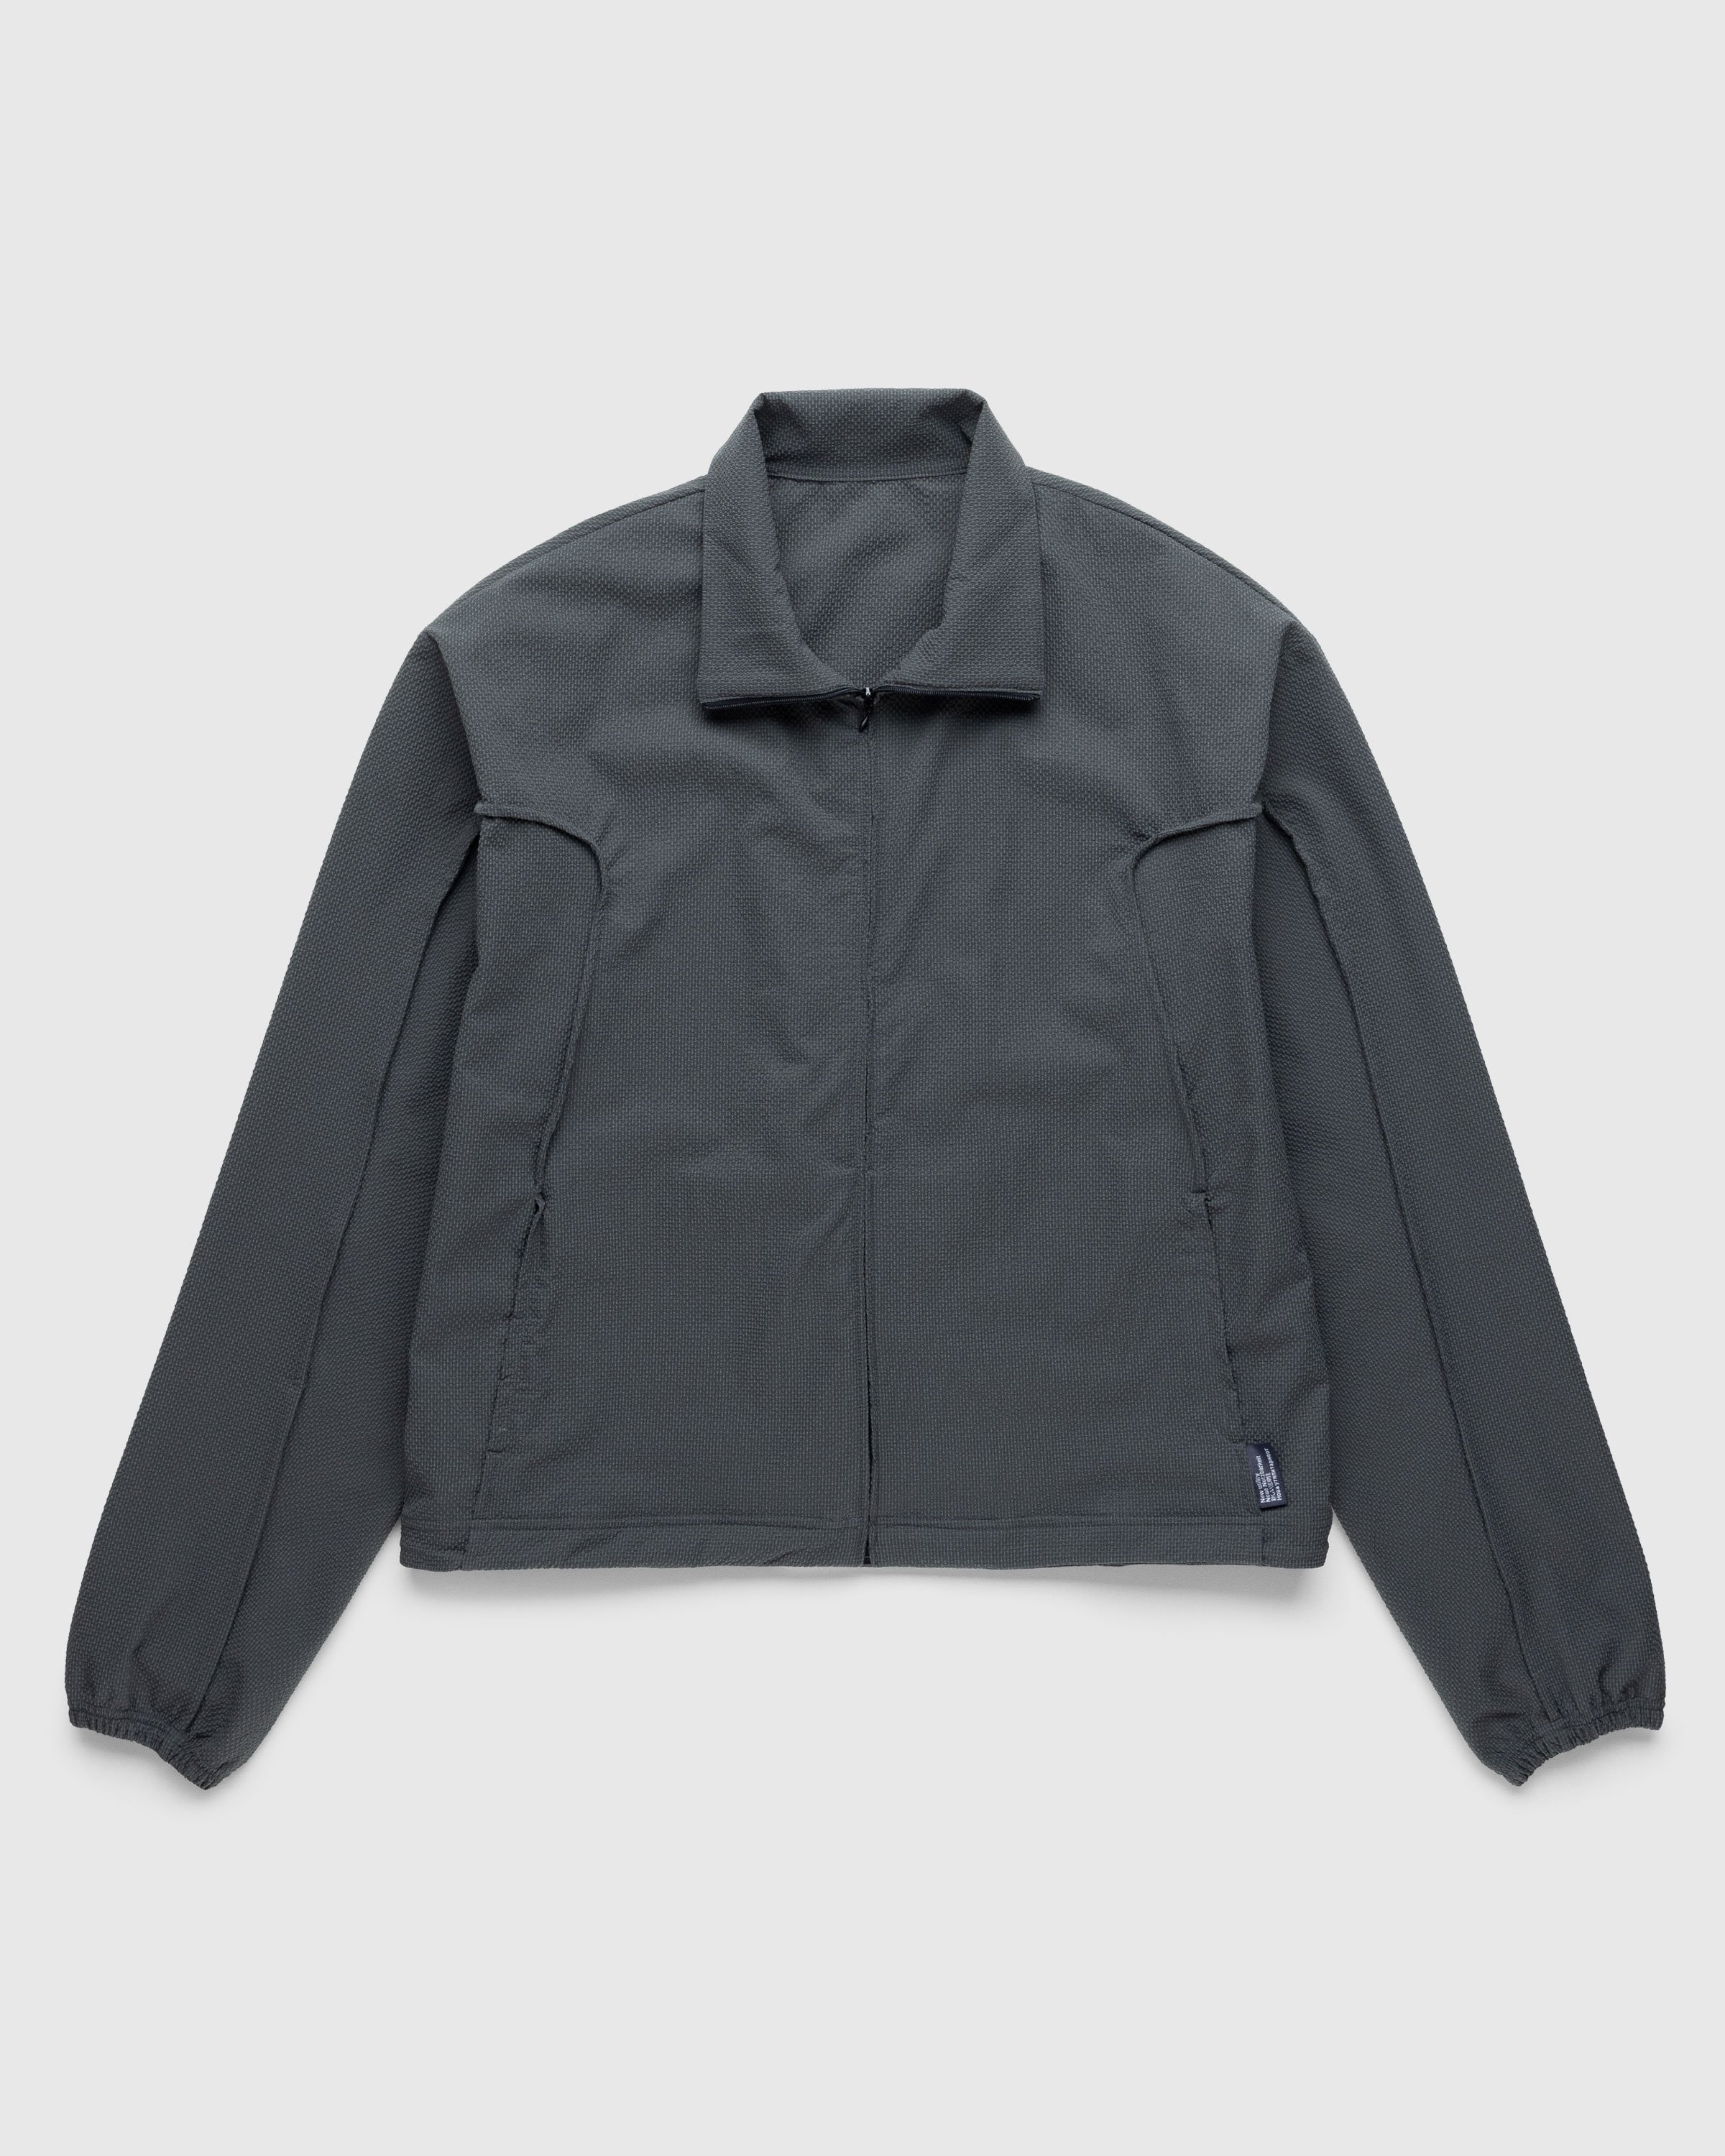 Reform FlexiRib Cropped Jacket in Grey Melange